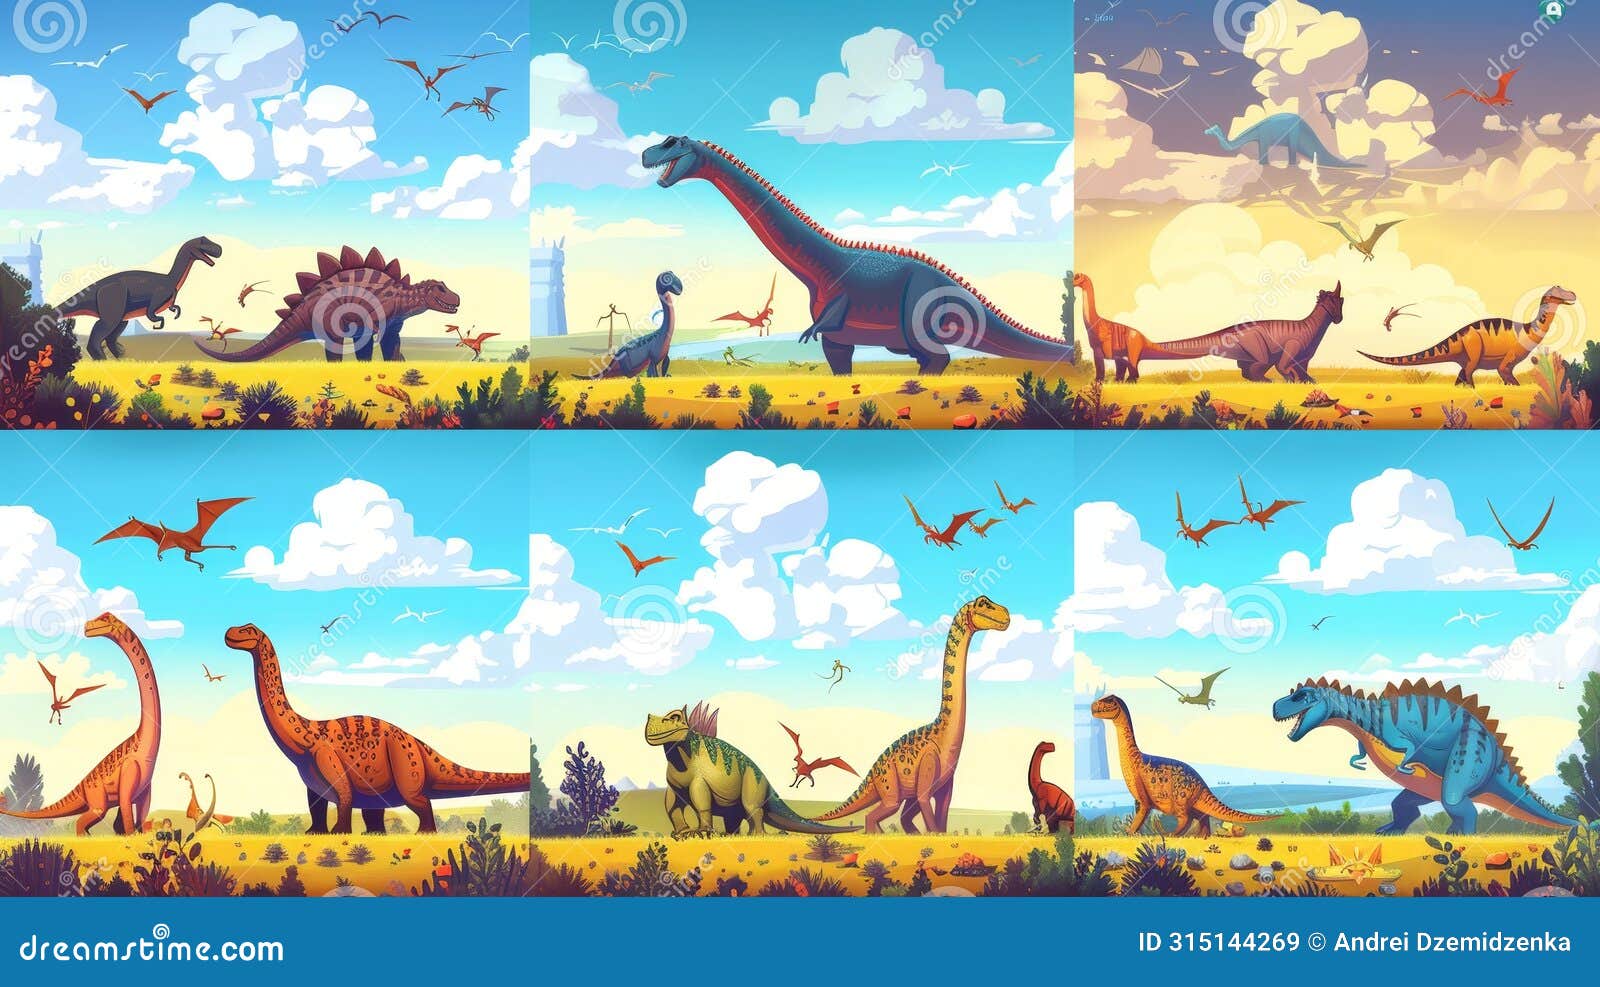 prehistory portal, paleontology study, exhibition service, dinosaur virtual park cartoon posters set. educational